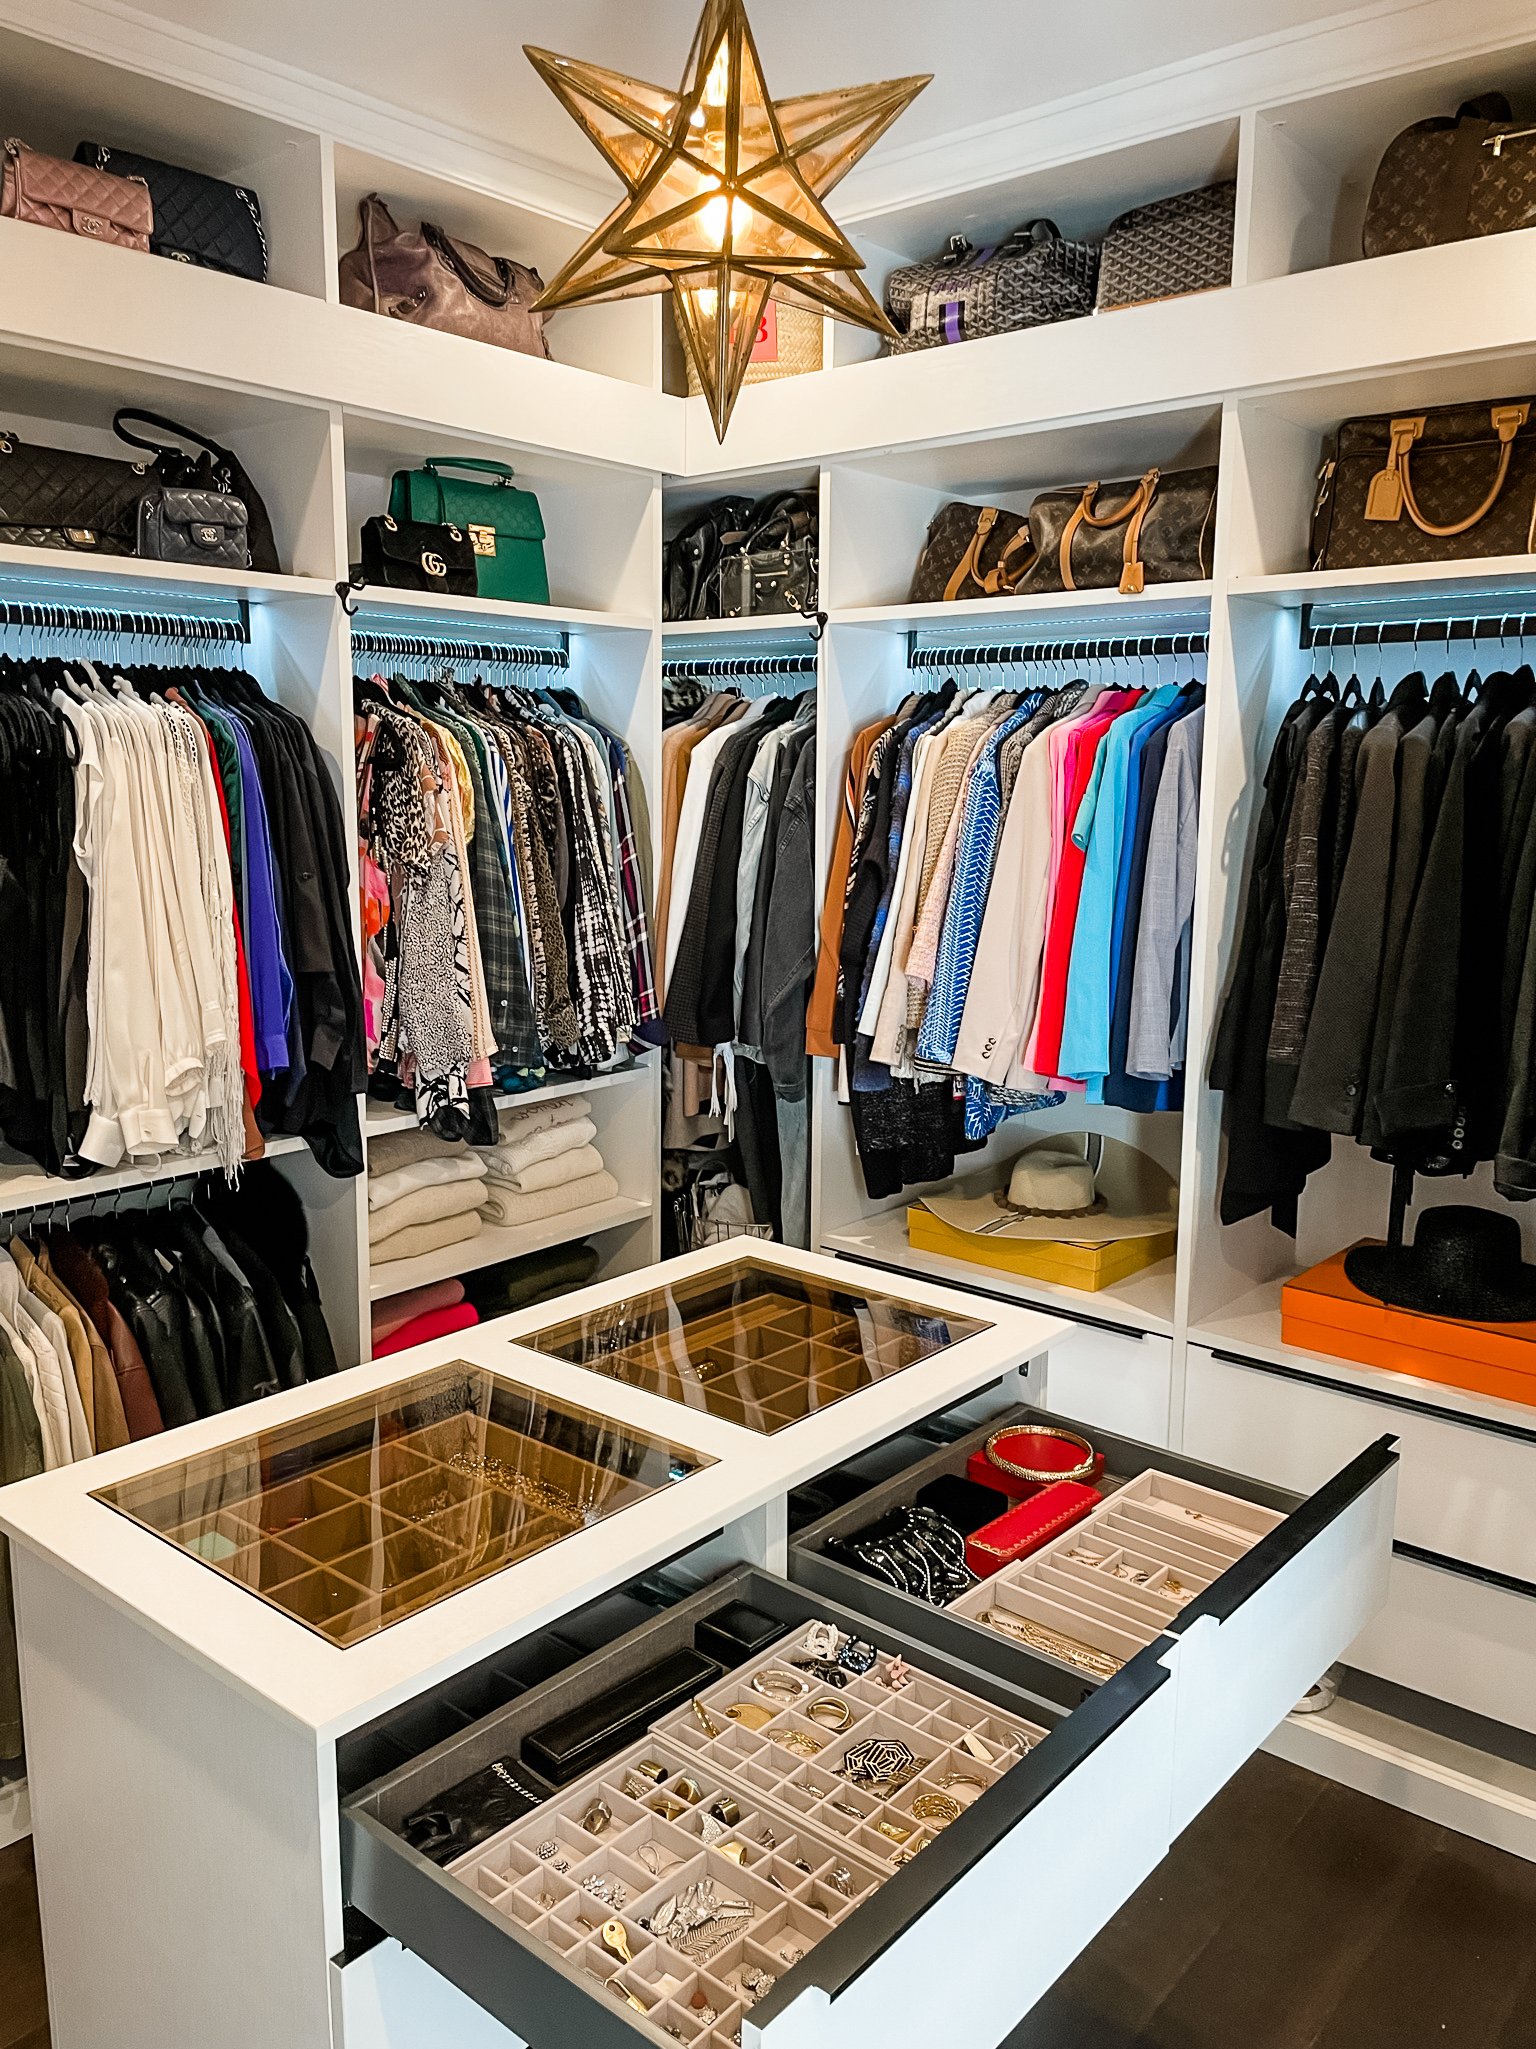 30 Things That'll Make Your Closet An Organized Dream